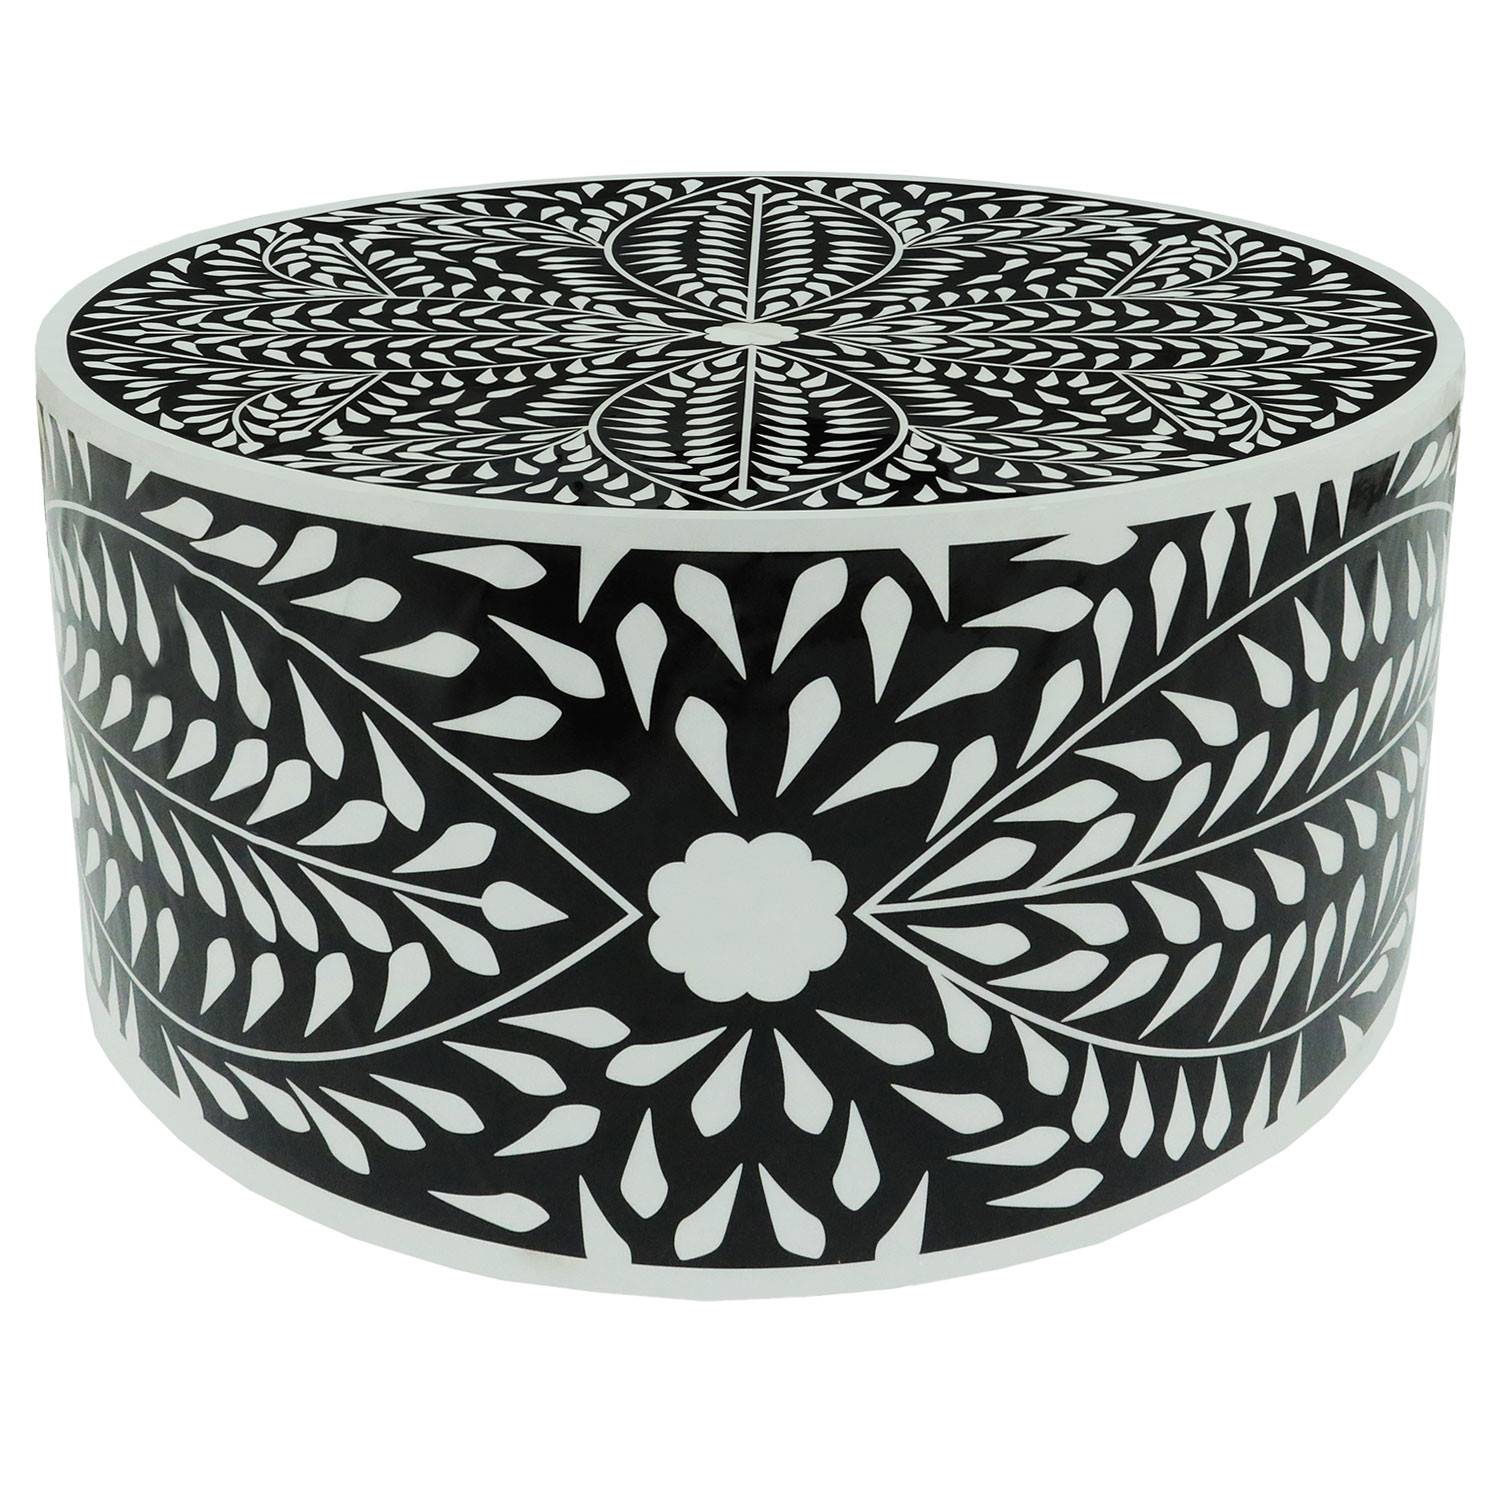 Tavolino rotondo in stile arty Ø66cm Viliana Motivo floreale bianco e nero